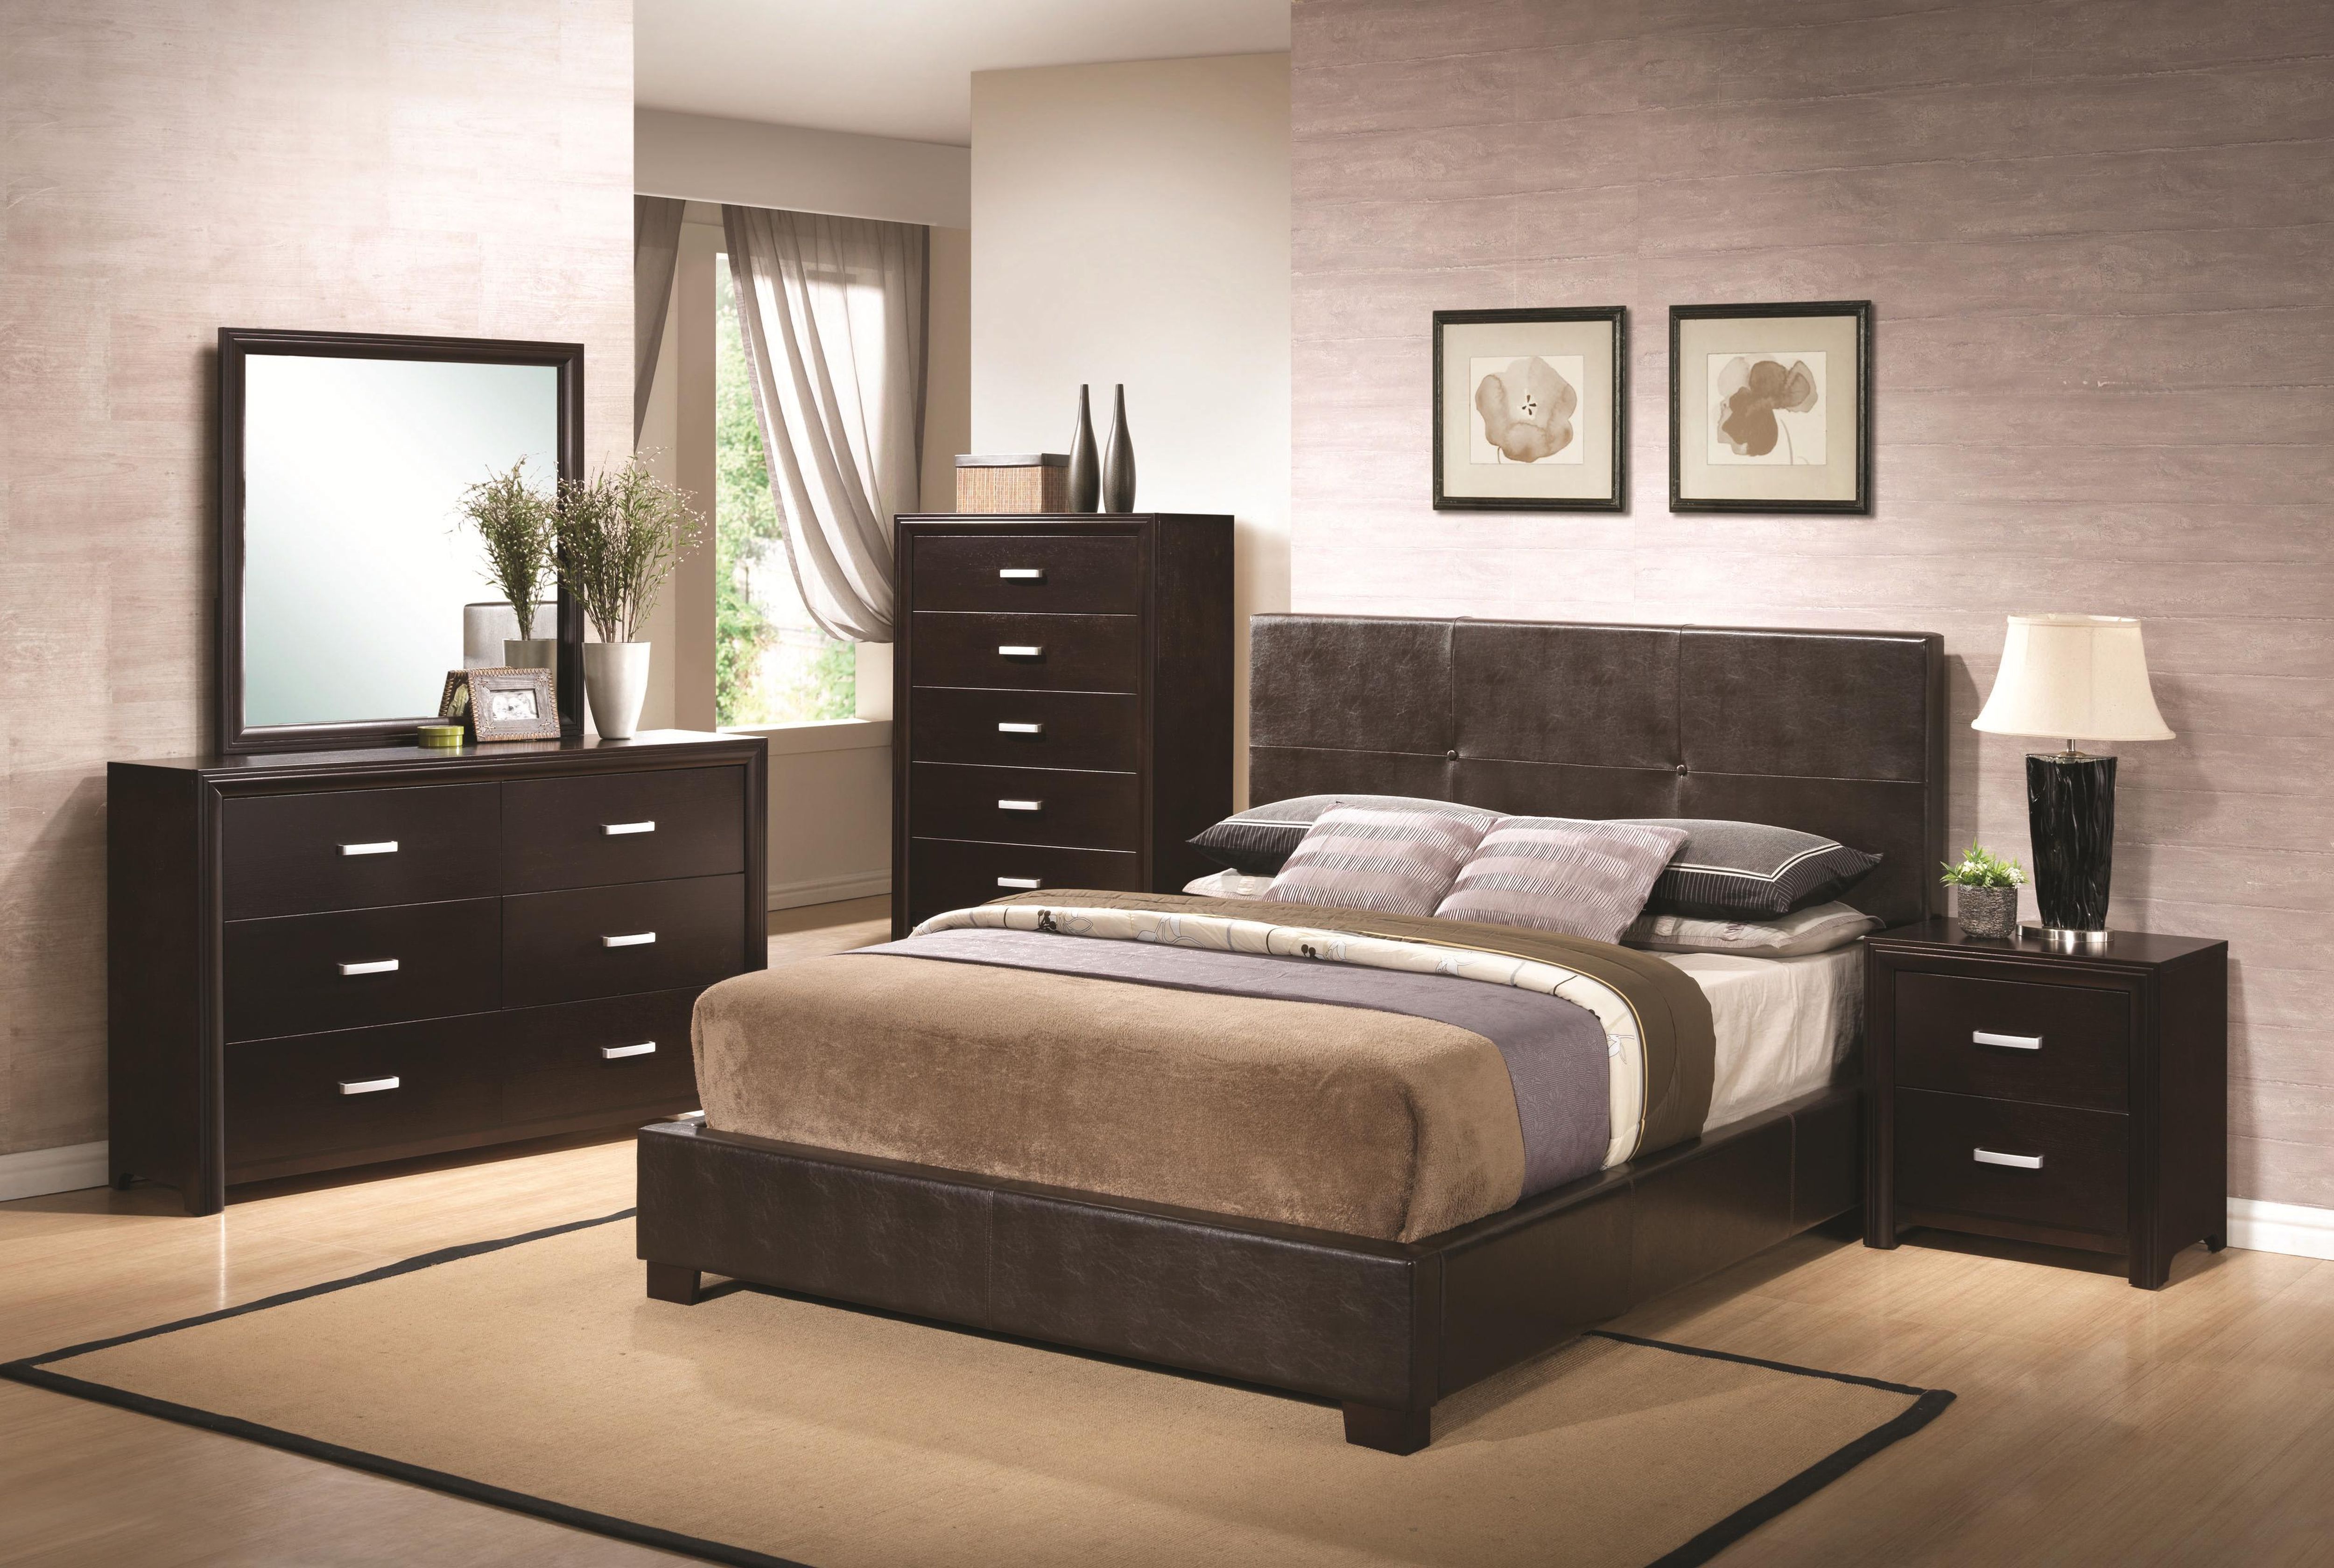 ikea boy bedroom furniture ideas